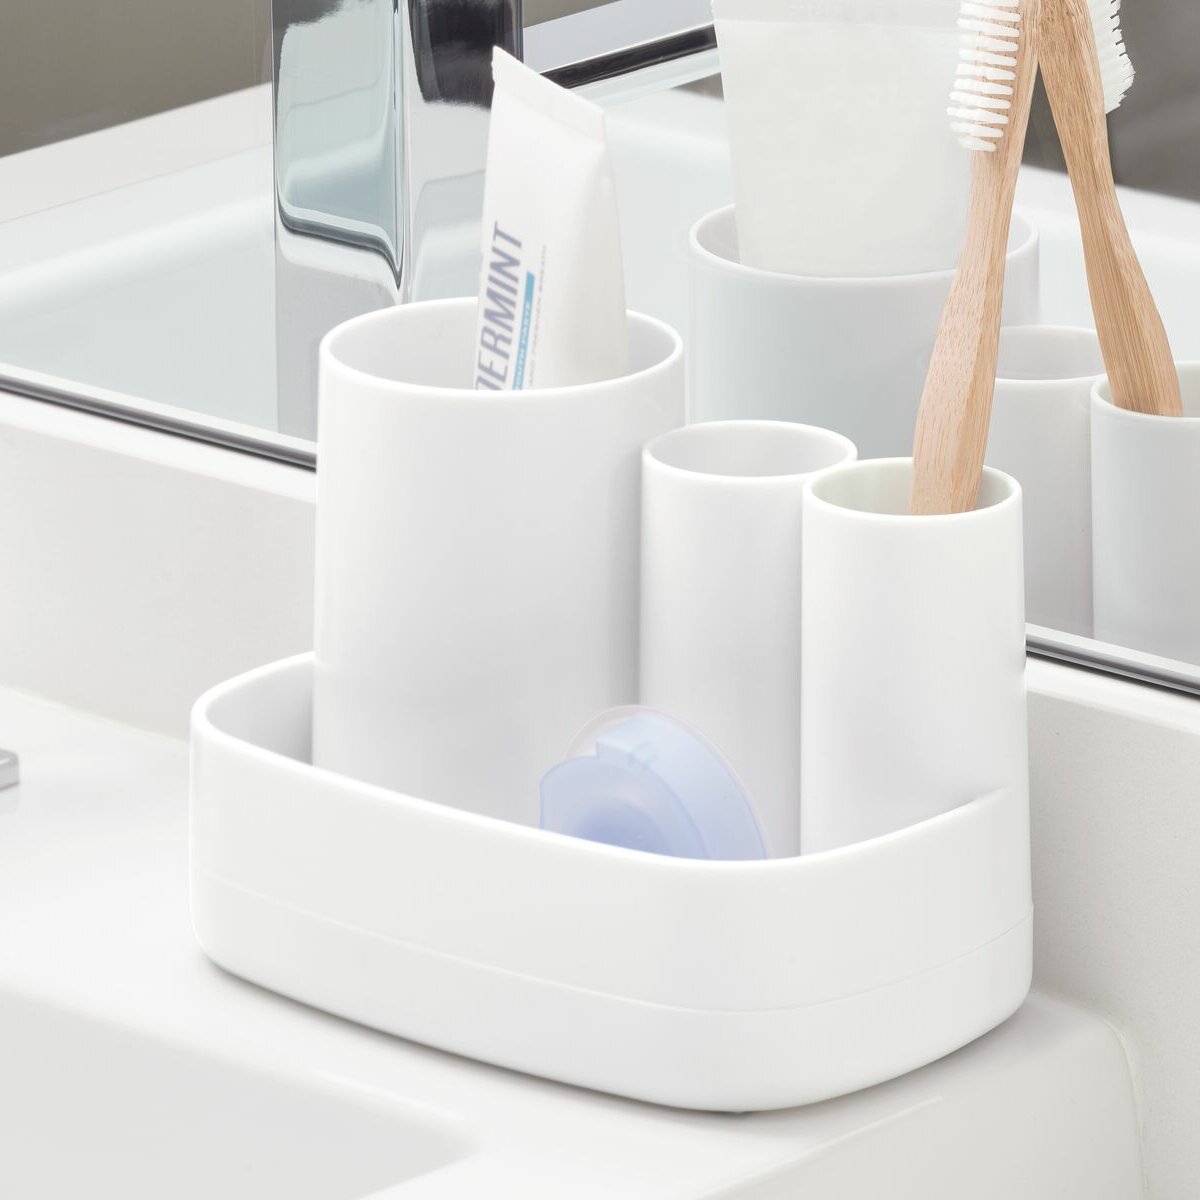 Dental Center Bathroom Toothbrush and Toothpaste Stand/Holder O InterDesign Med 